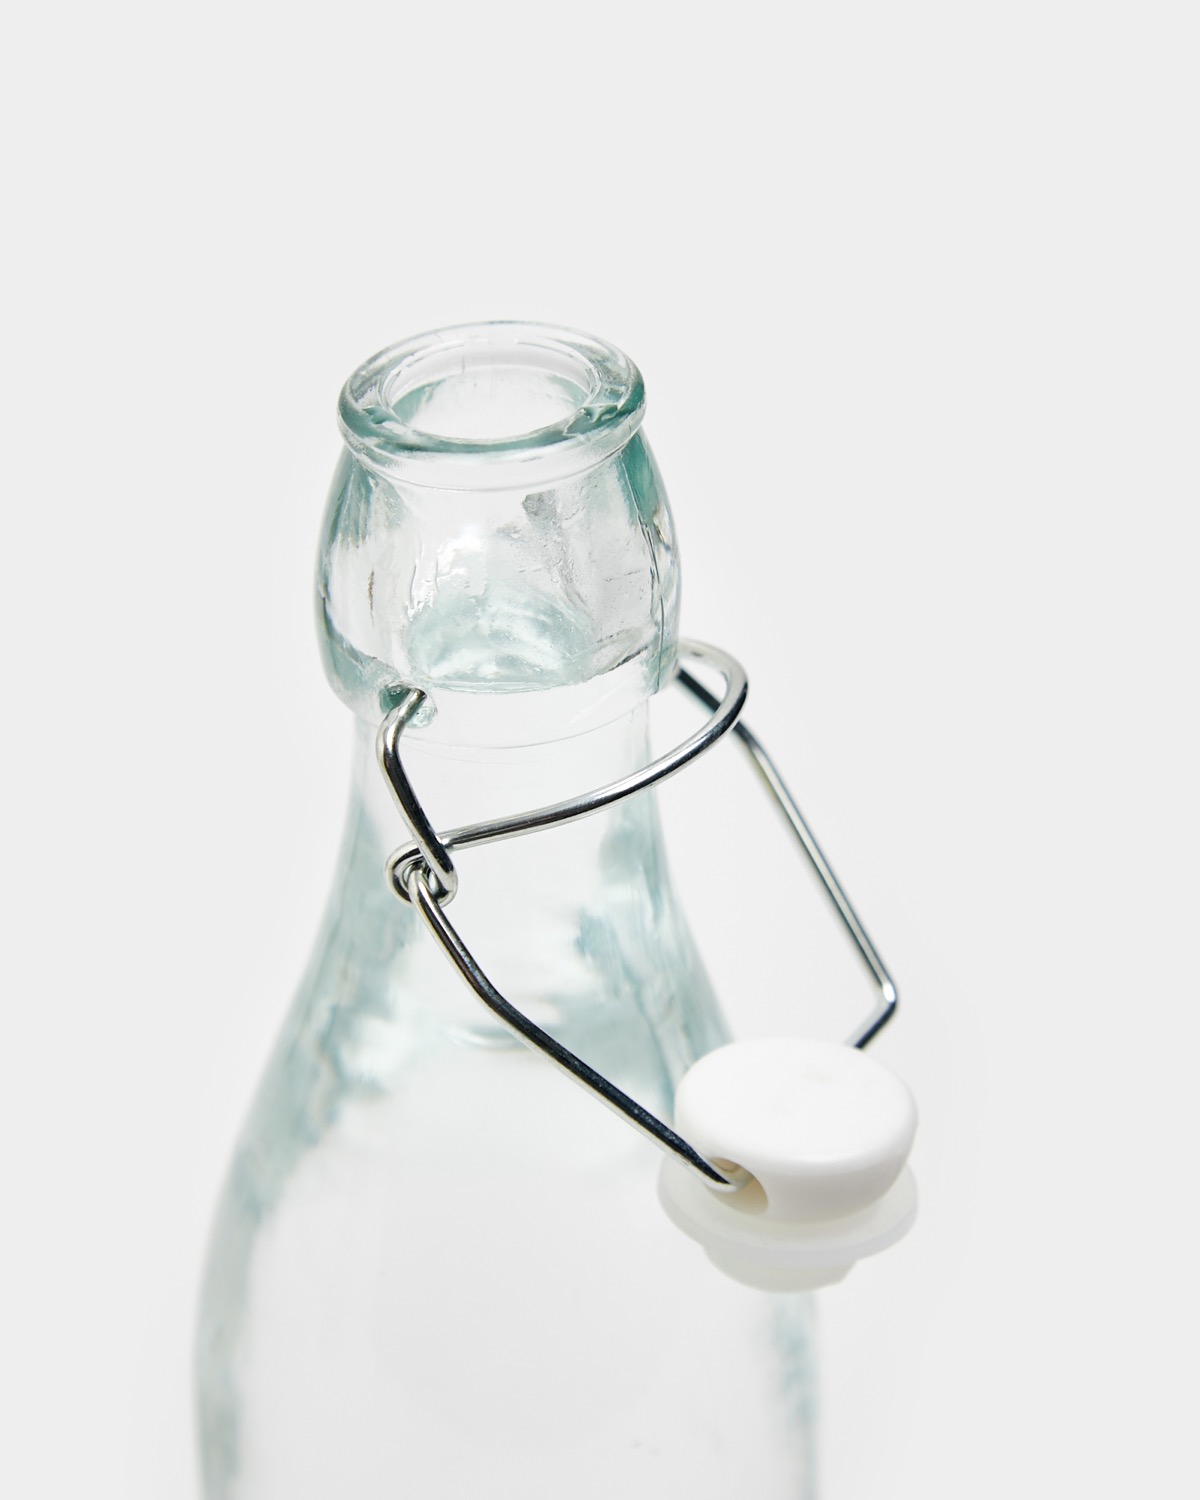 .5L Glass Milk Container